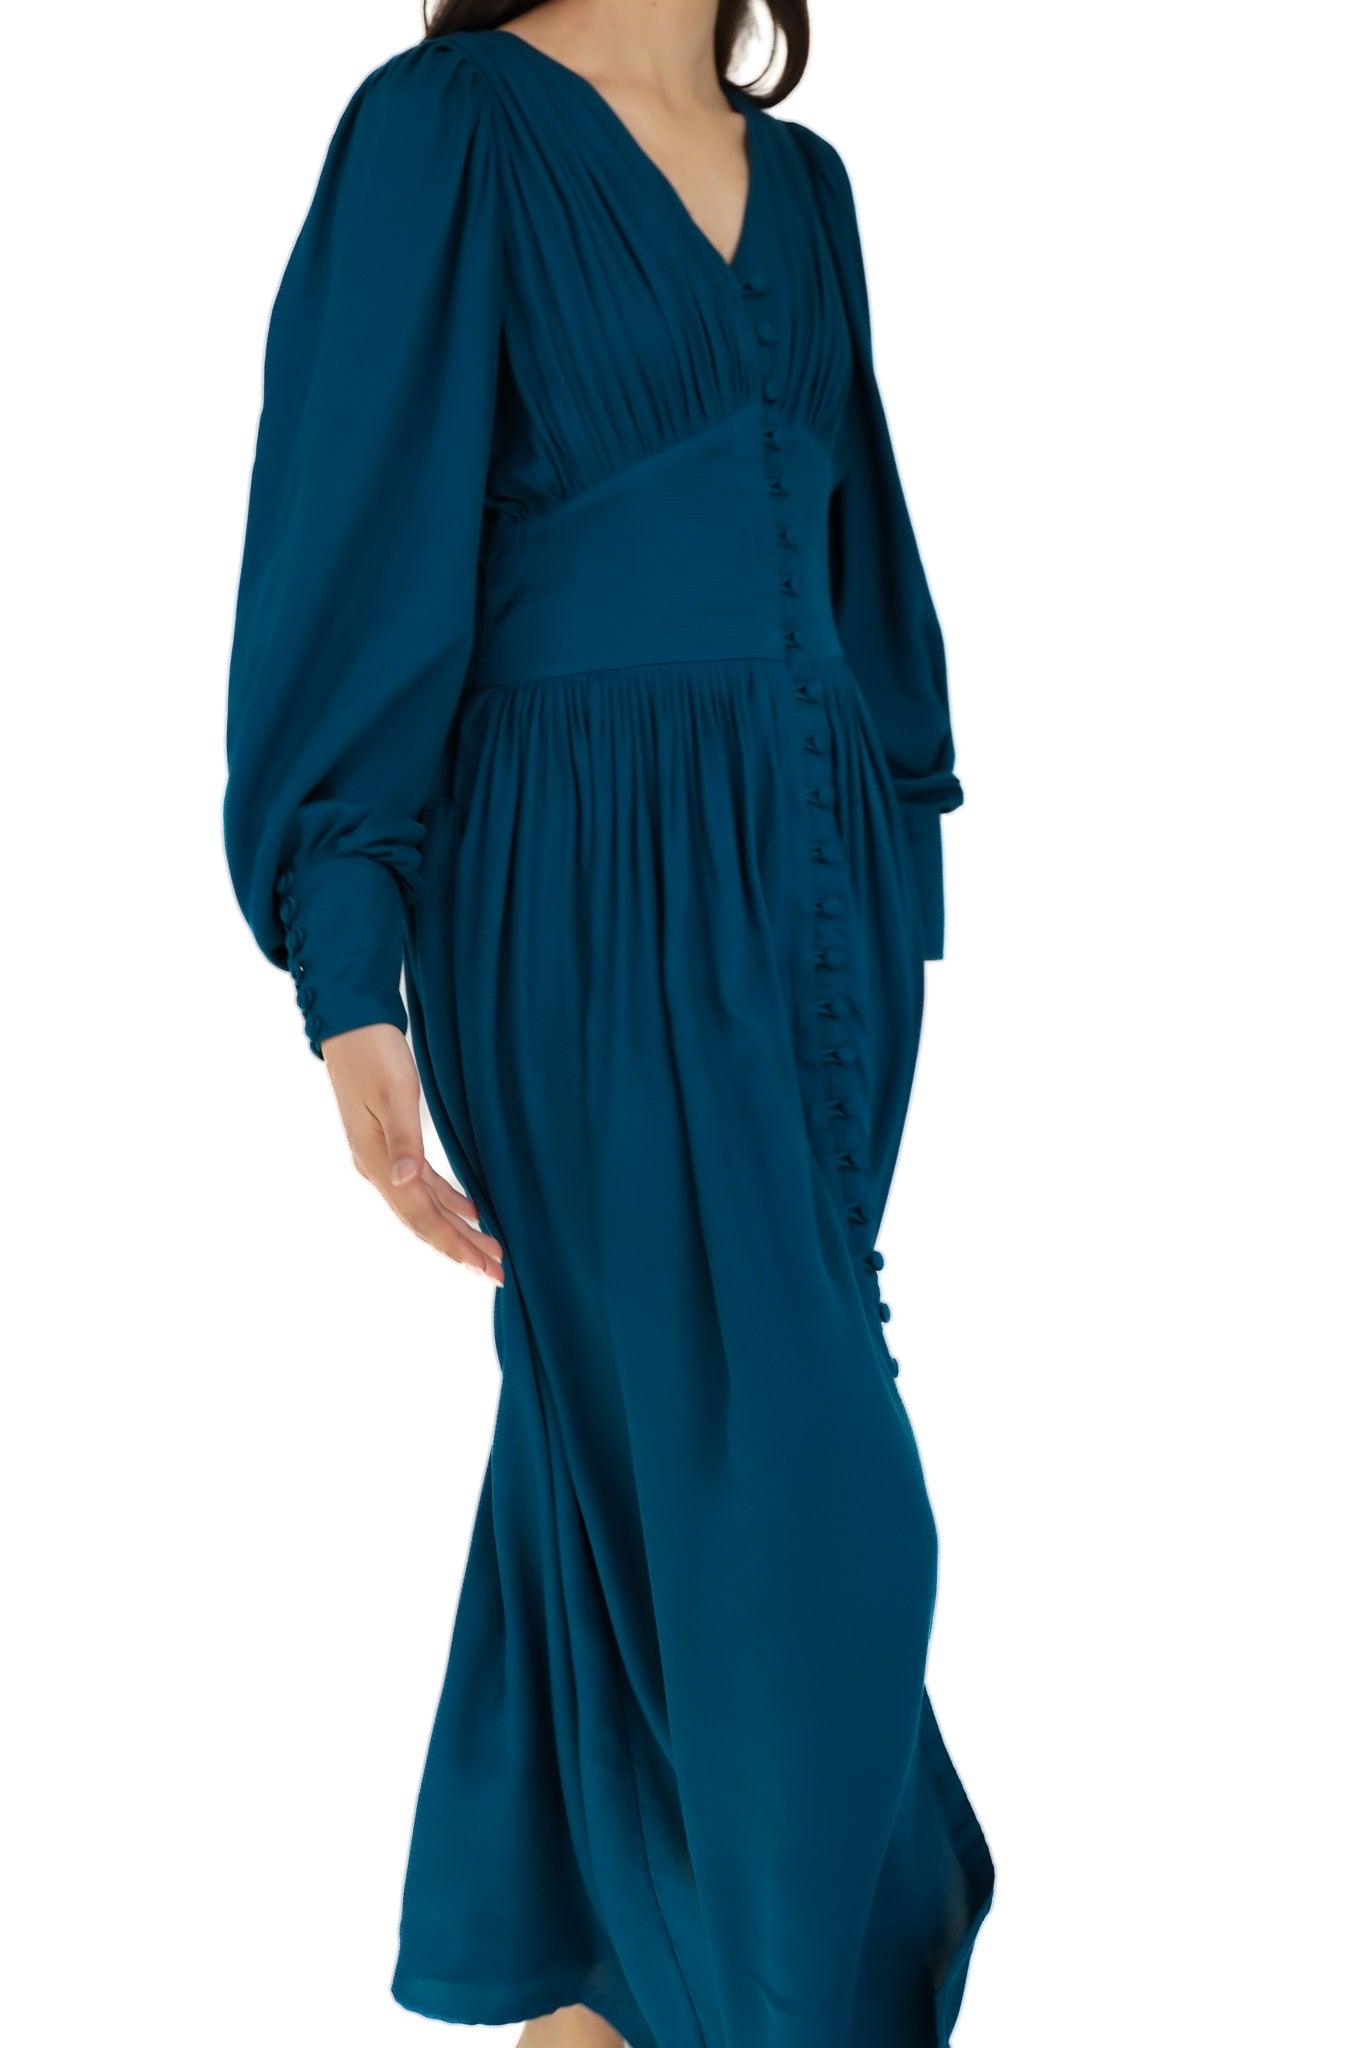 Shaukeen Indigo Blue Buttoned Front Midi Dress with Long Sleeves - TAHLIRA